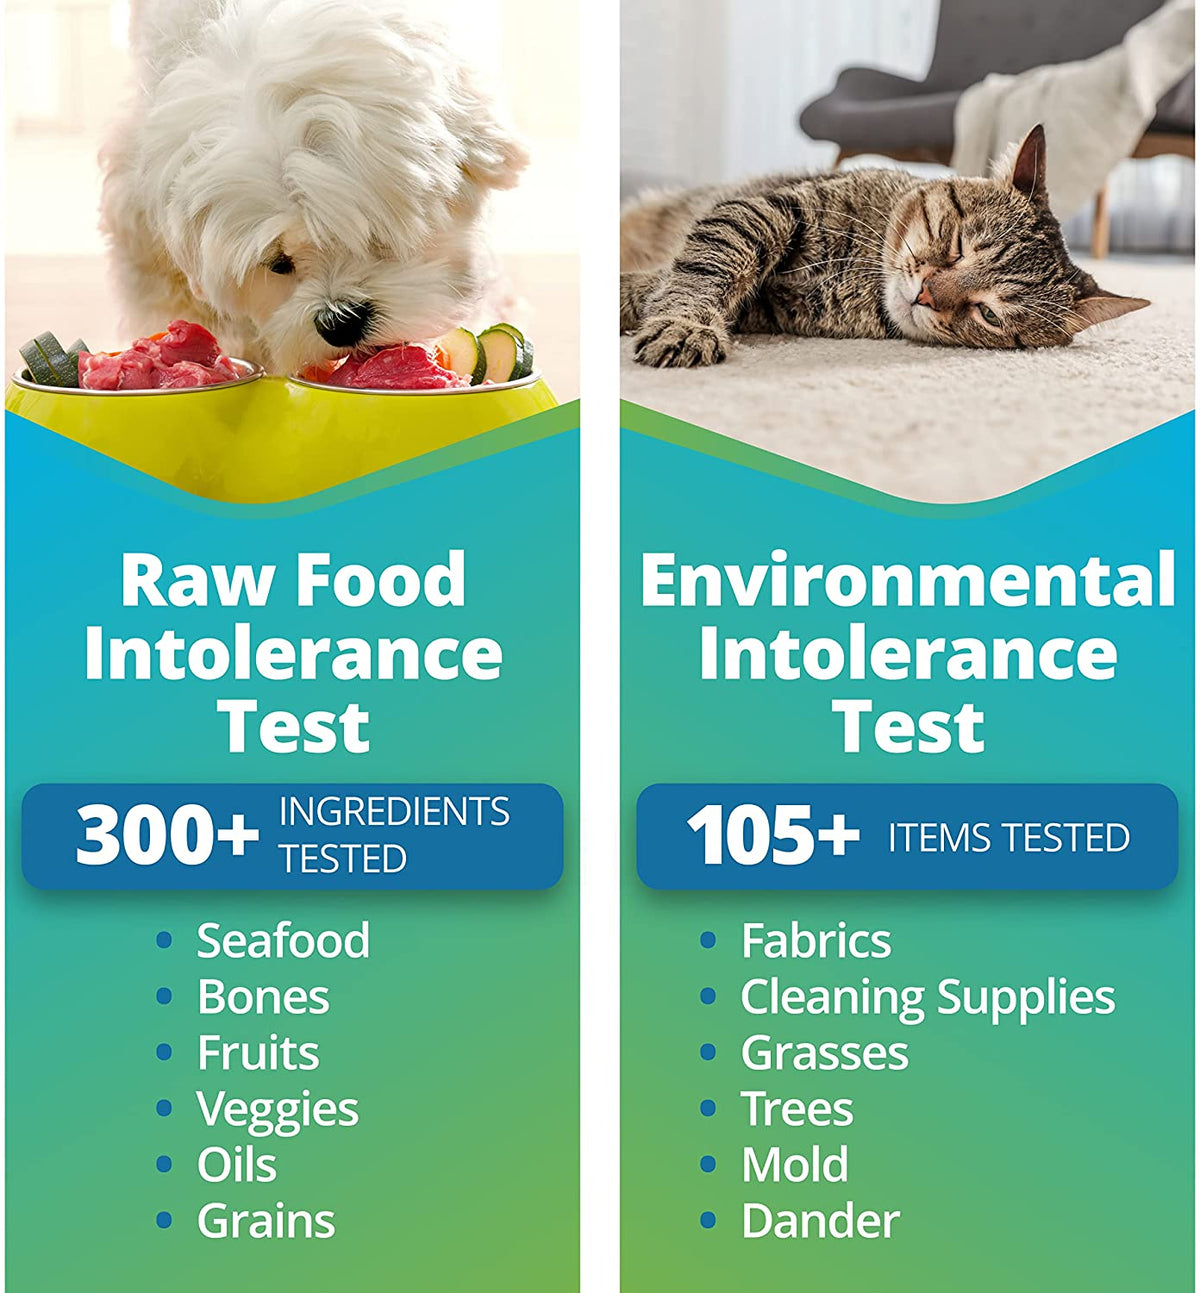 Pet Raw Food Intolerance Test Wholesale